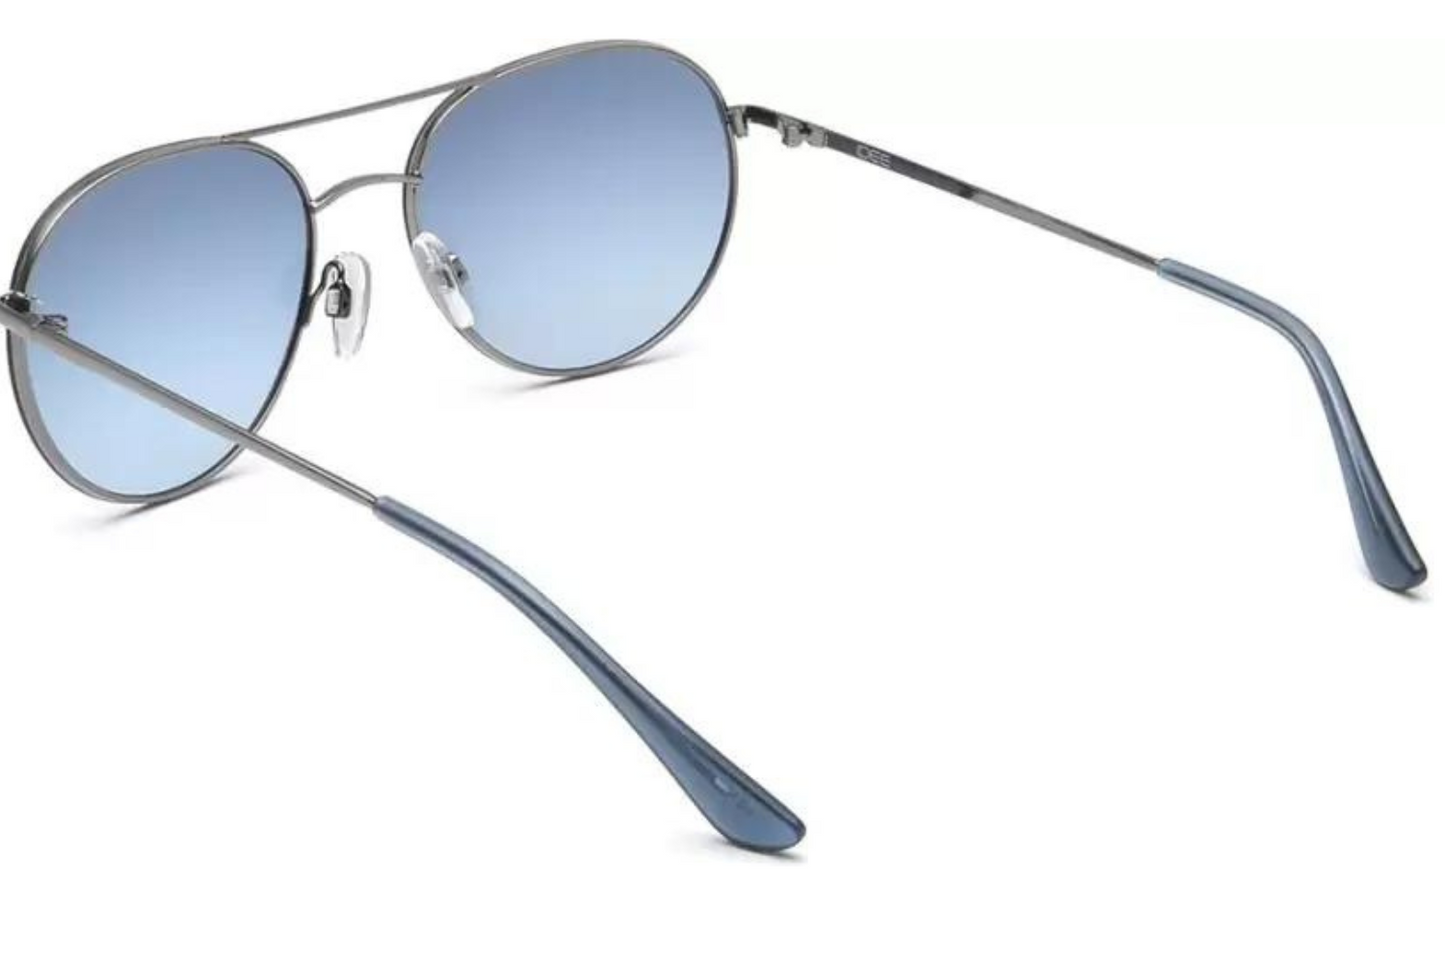 IDEE Sunglasses S2504 C4